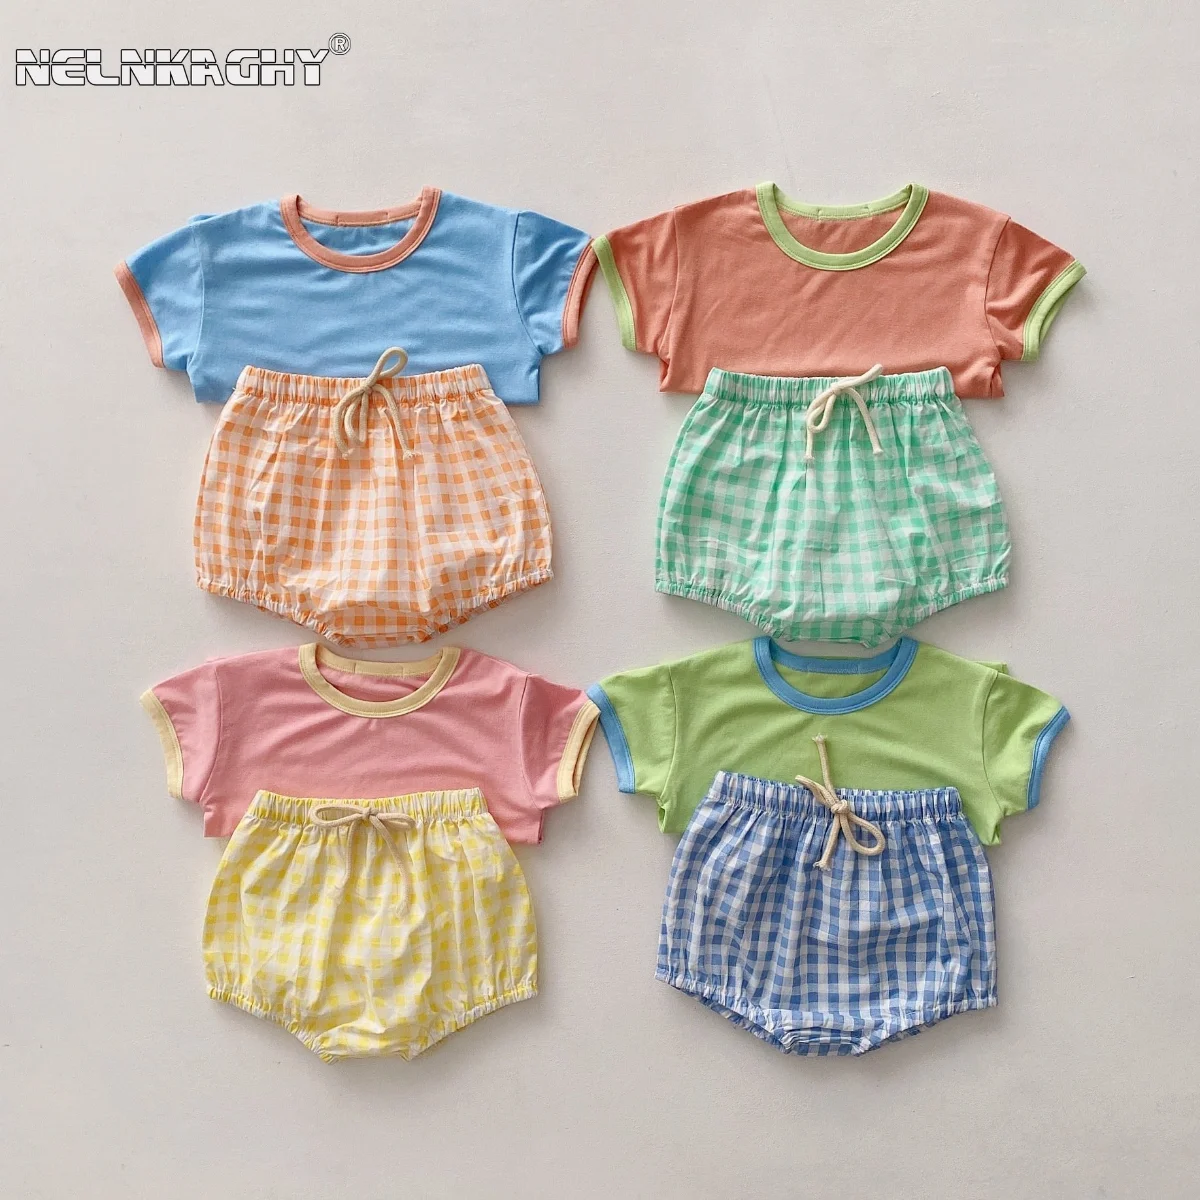 Infant Newborn Girls Boys Summer Short Sleeve Patch Top Tees Plaid Bottoms Kids Baby Clothing Cotton Sets 2pcs 0-24M